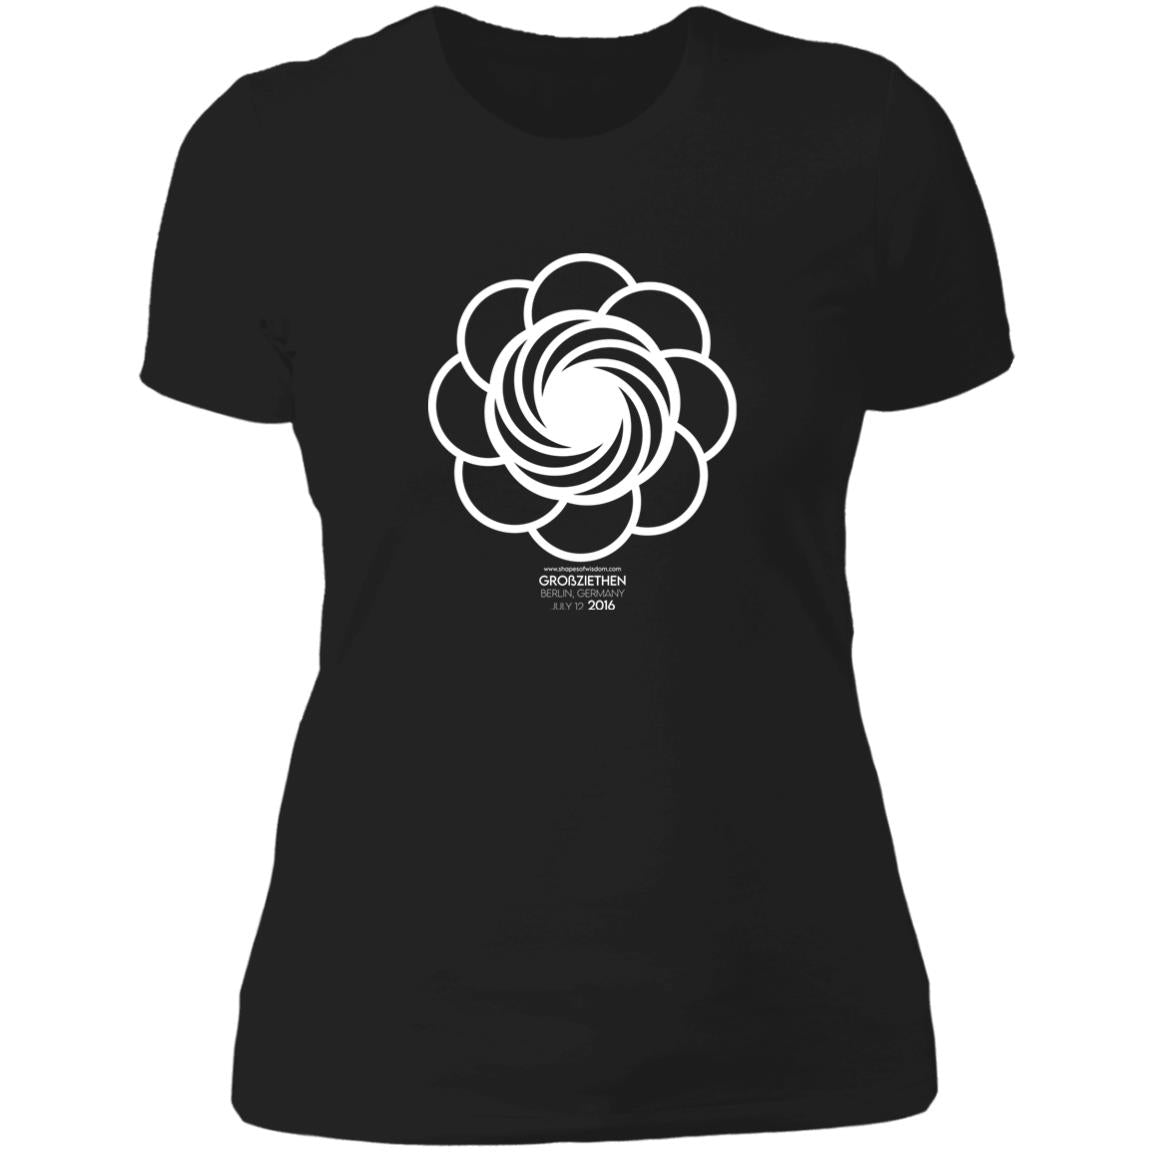 Crop Circle Basic T-Shirt - Großziethen 7